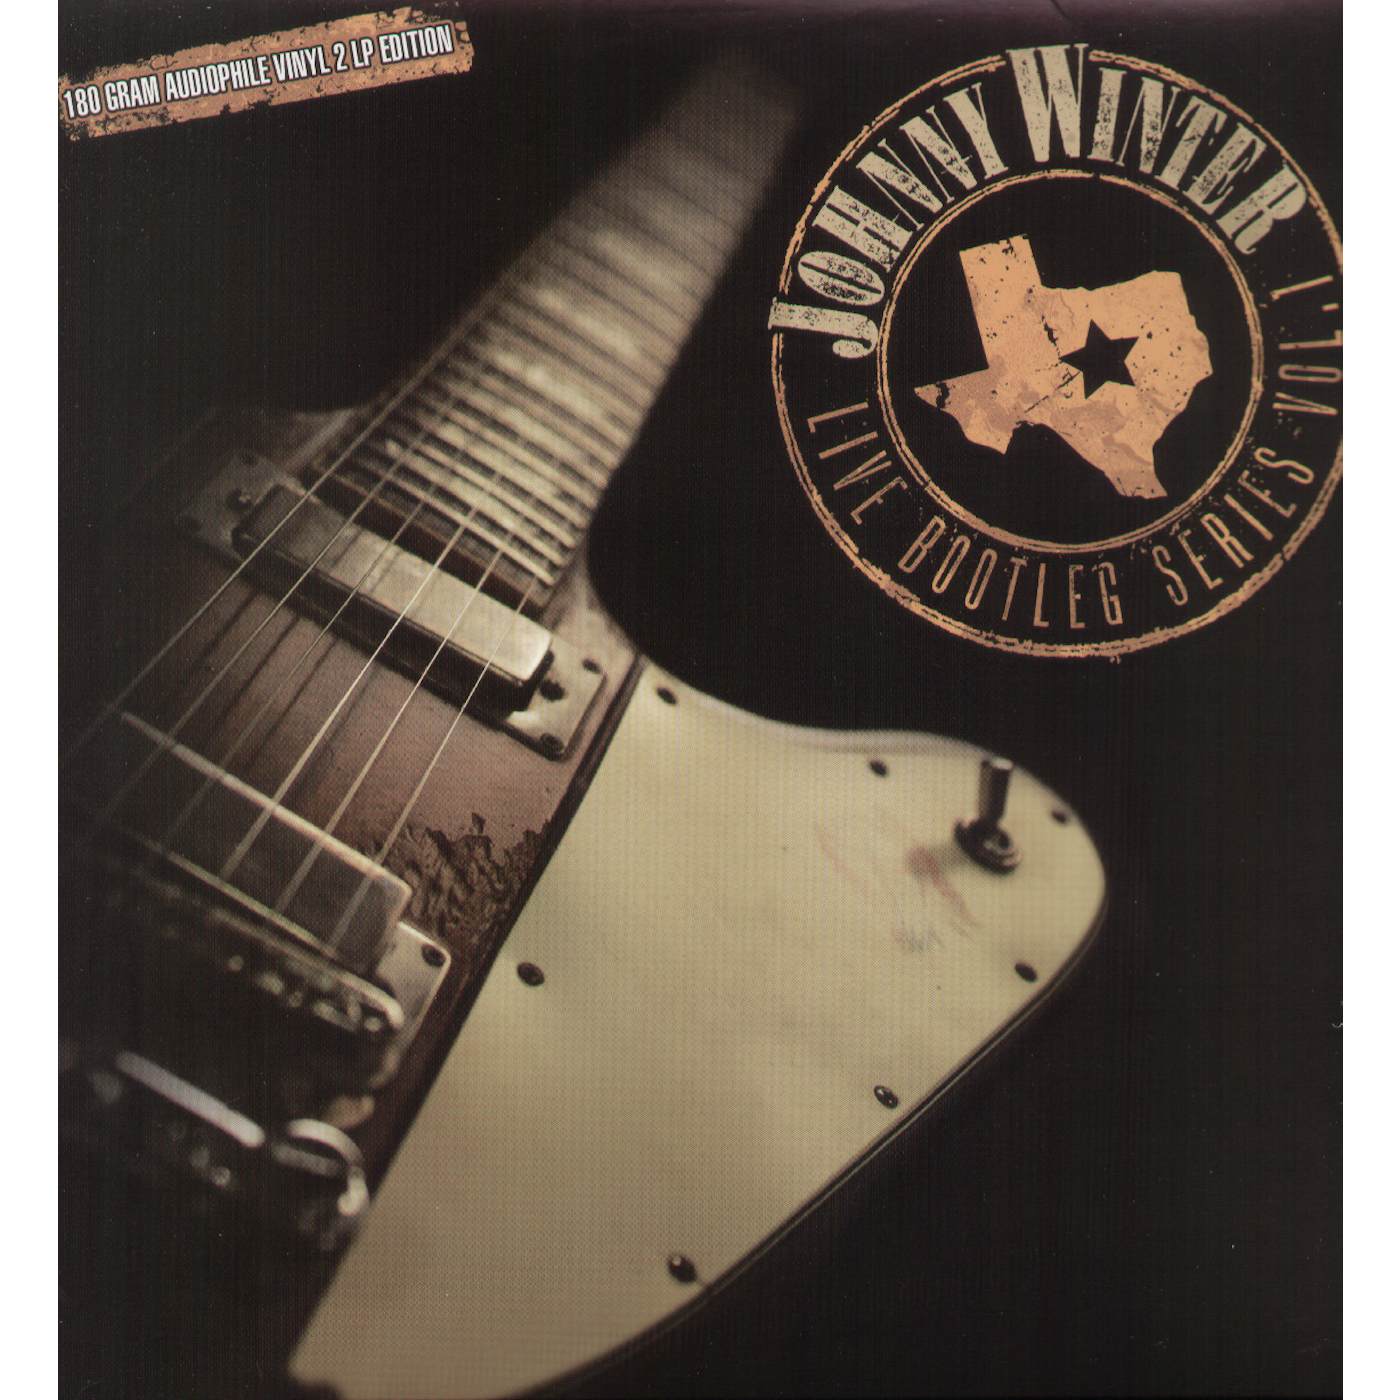 Johnny Winter LIVE BOOTLEG SERIES 1 Vinyl Record